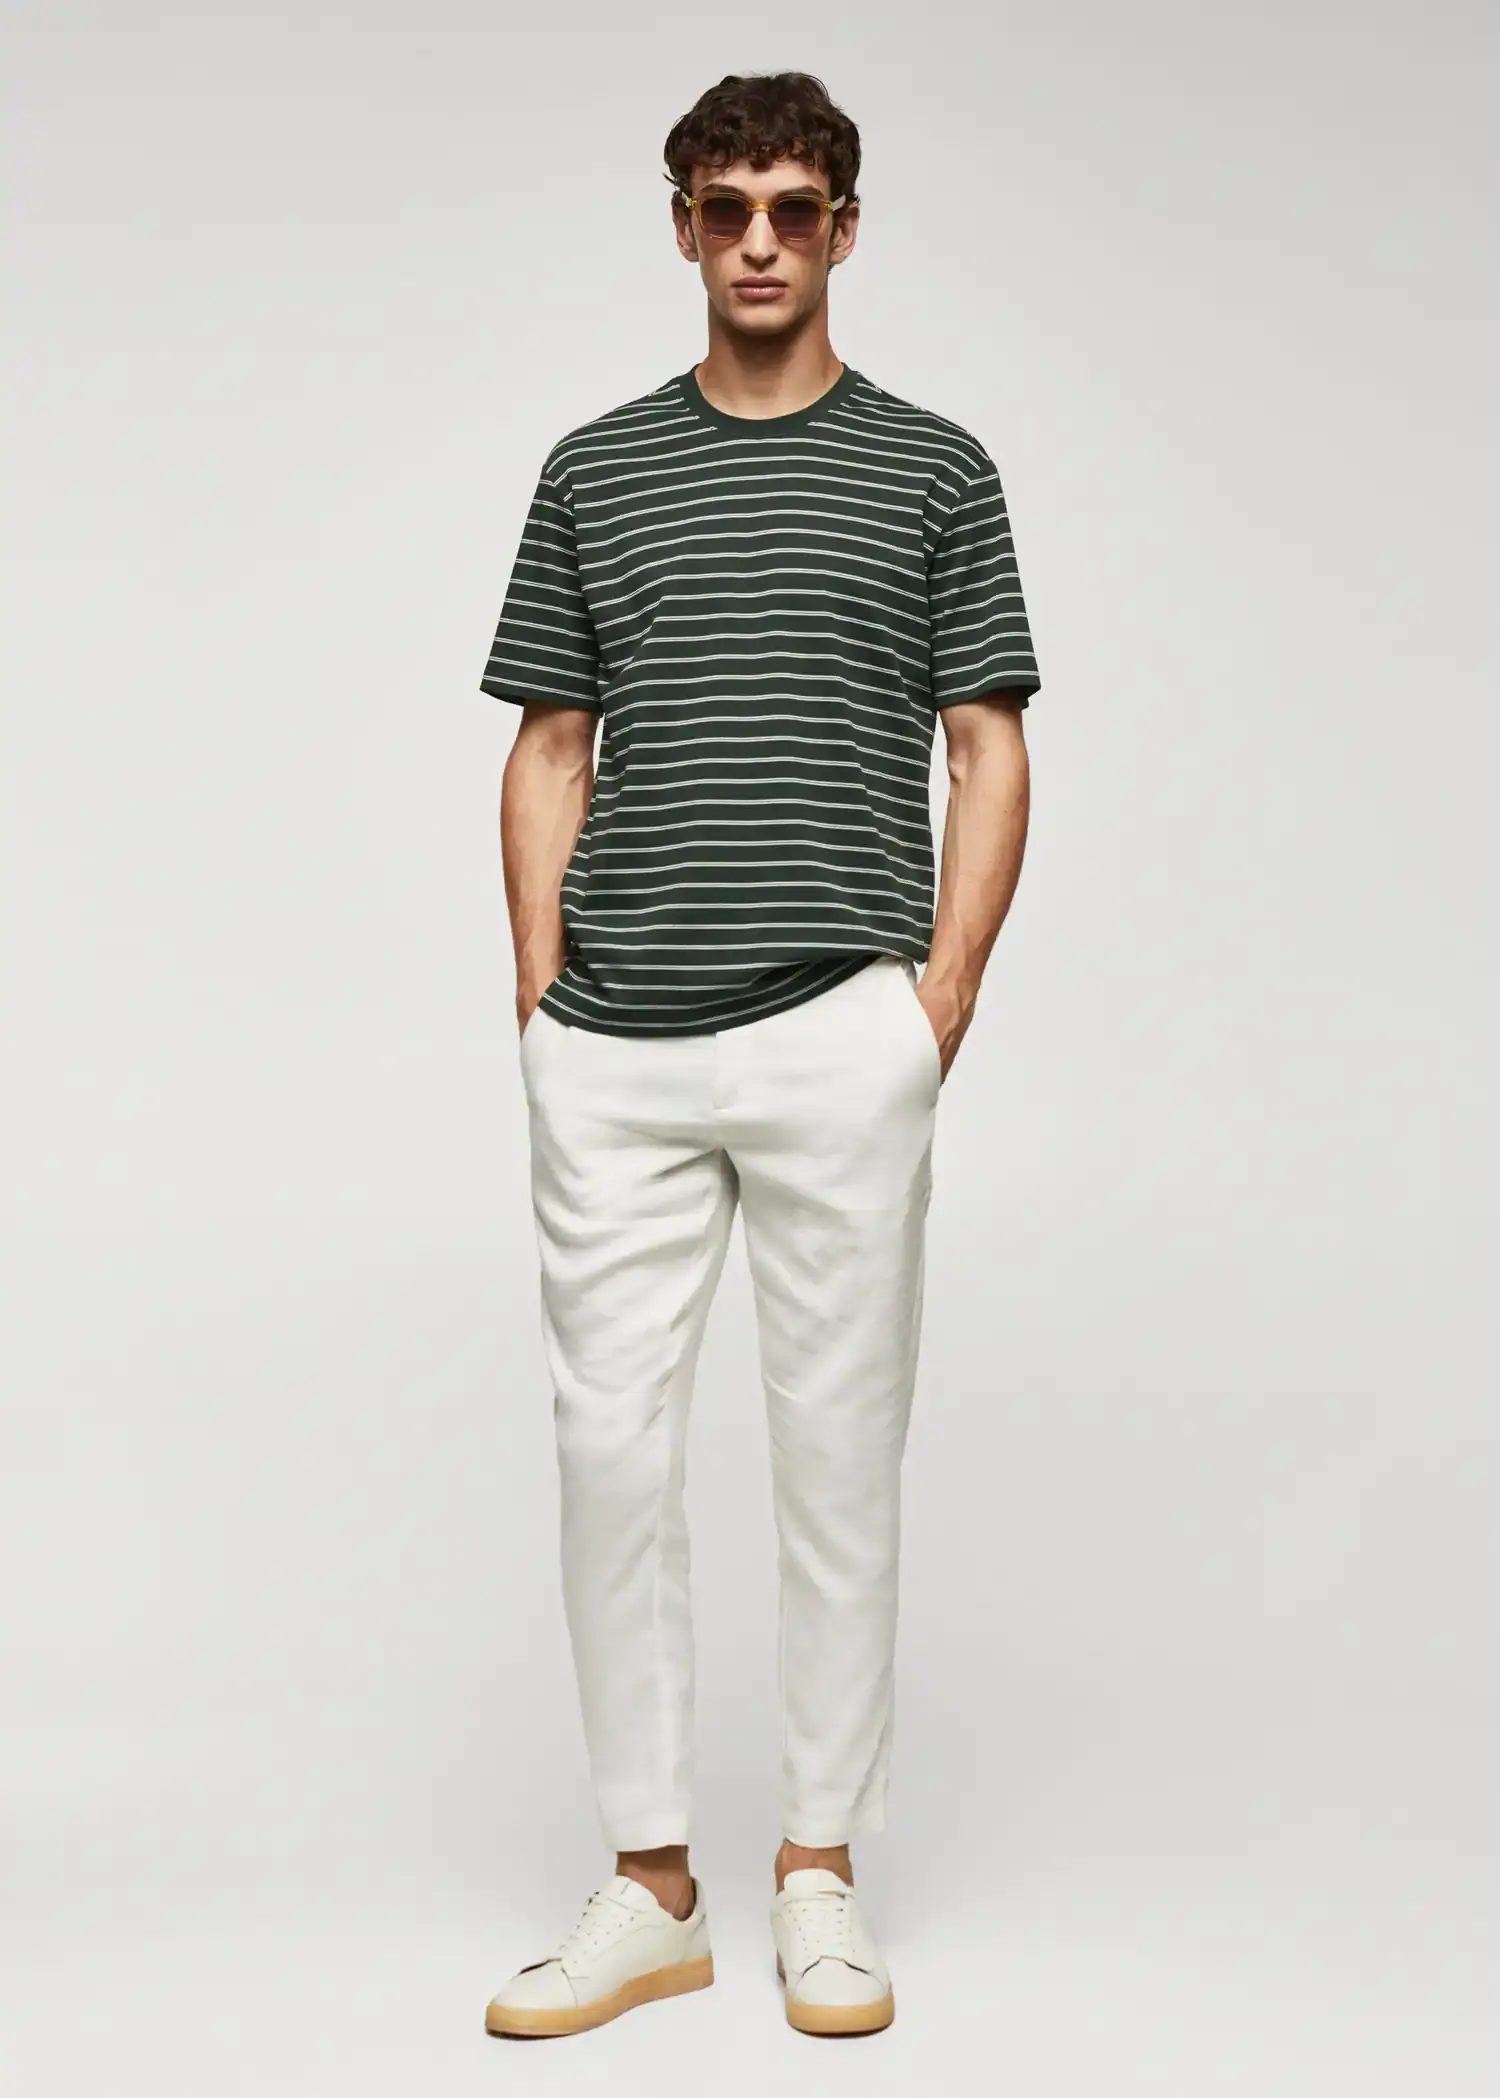 Mango Striped 100% cotton t-shirt. a man wearing a striped shirt and white pants. 